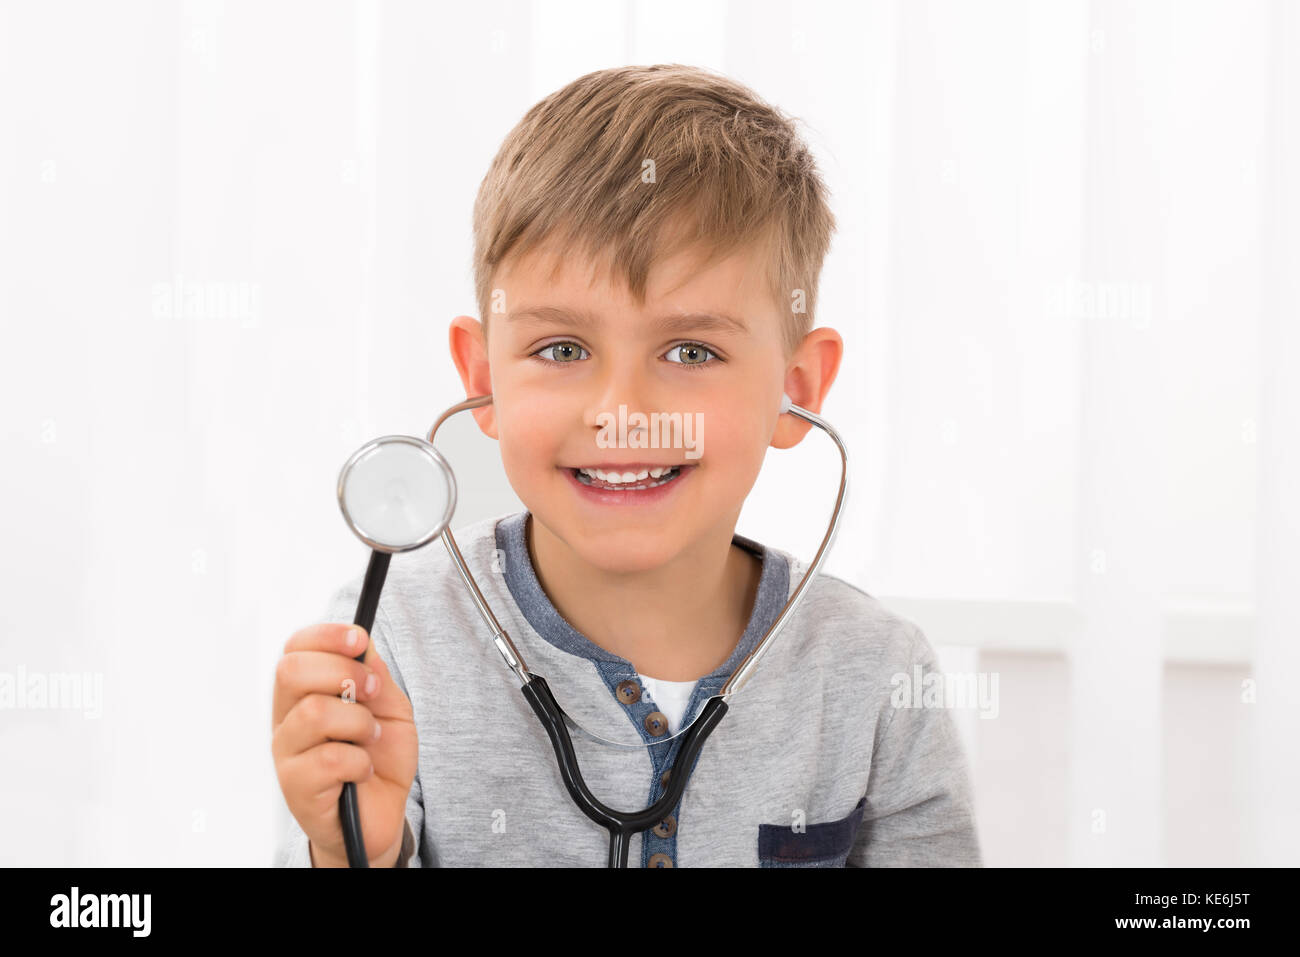 Portrait Of A Happy Boy With Stethoscope Stock Photo